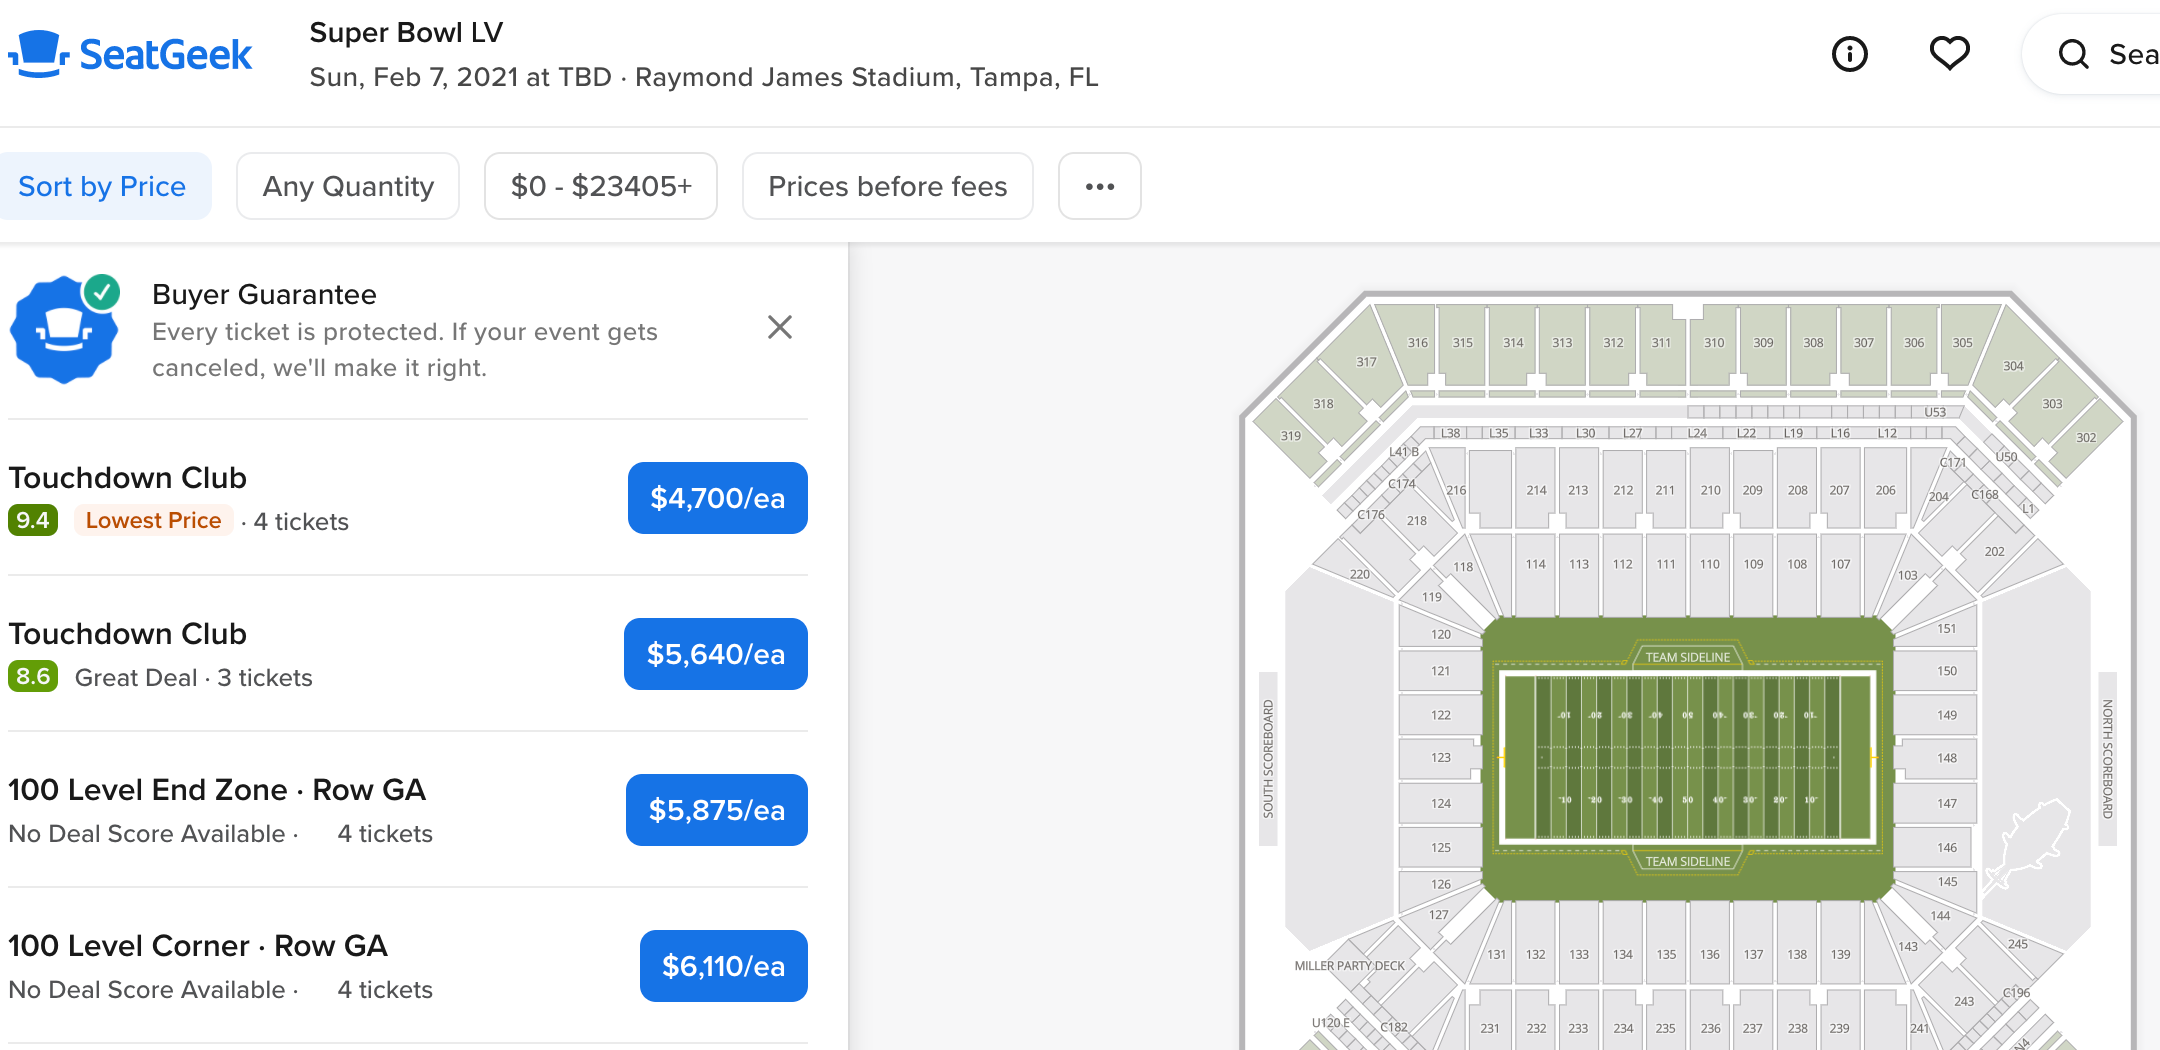 Super Bowl ticket prices soar